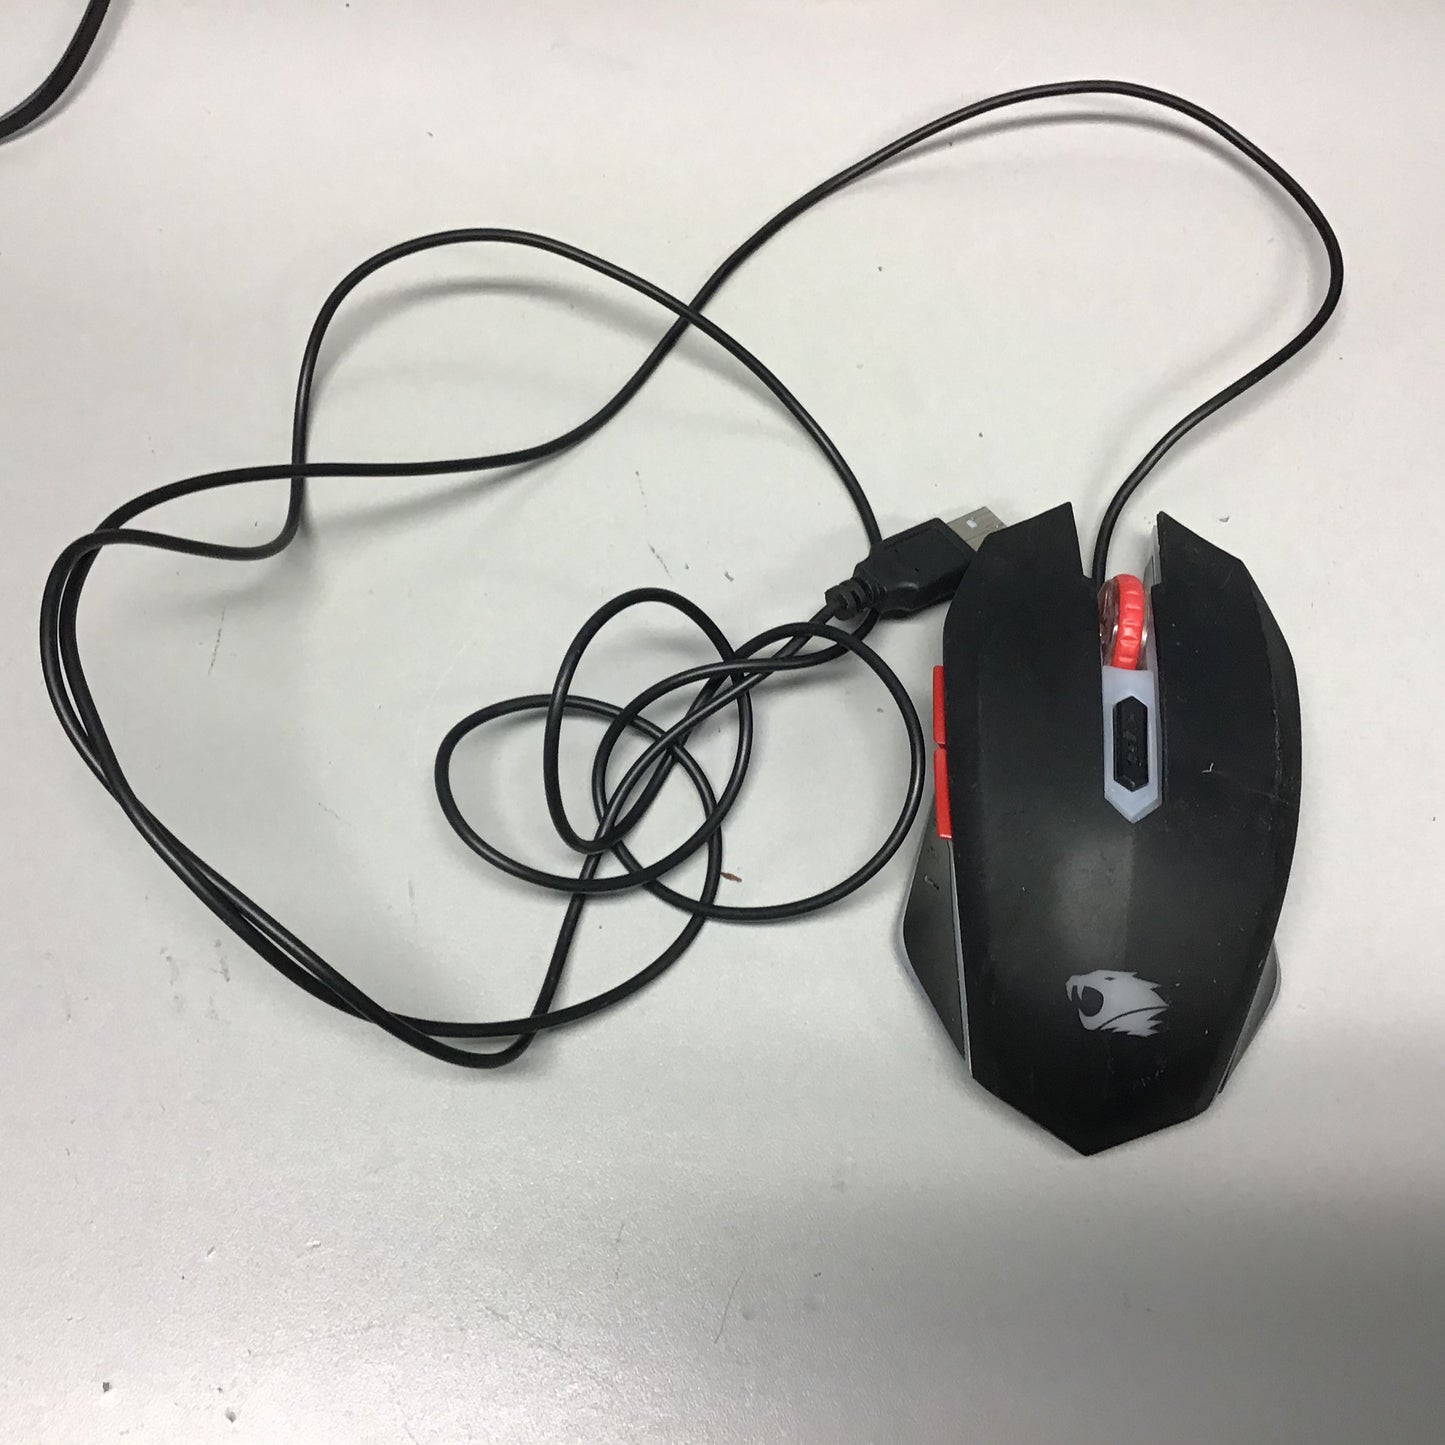 IBUYPOWER USB Gaming Mouse